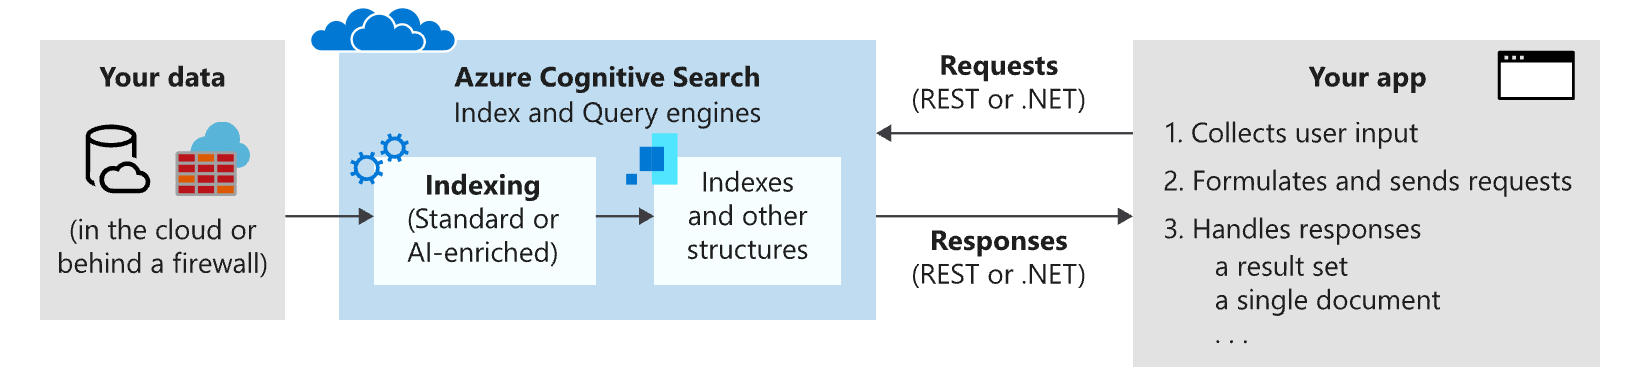 Azure Cognitive Search Architecture